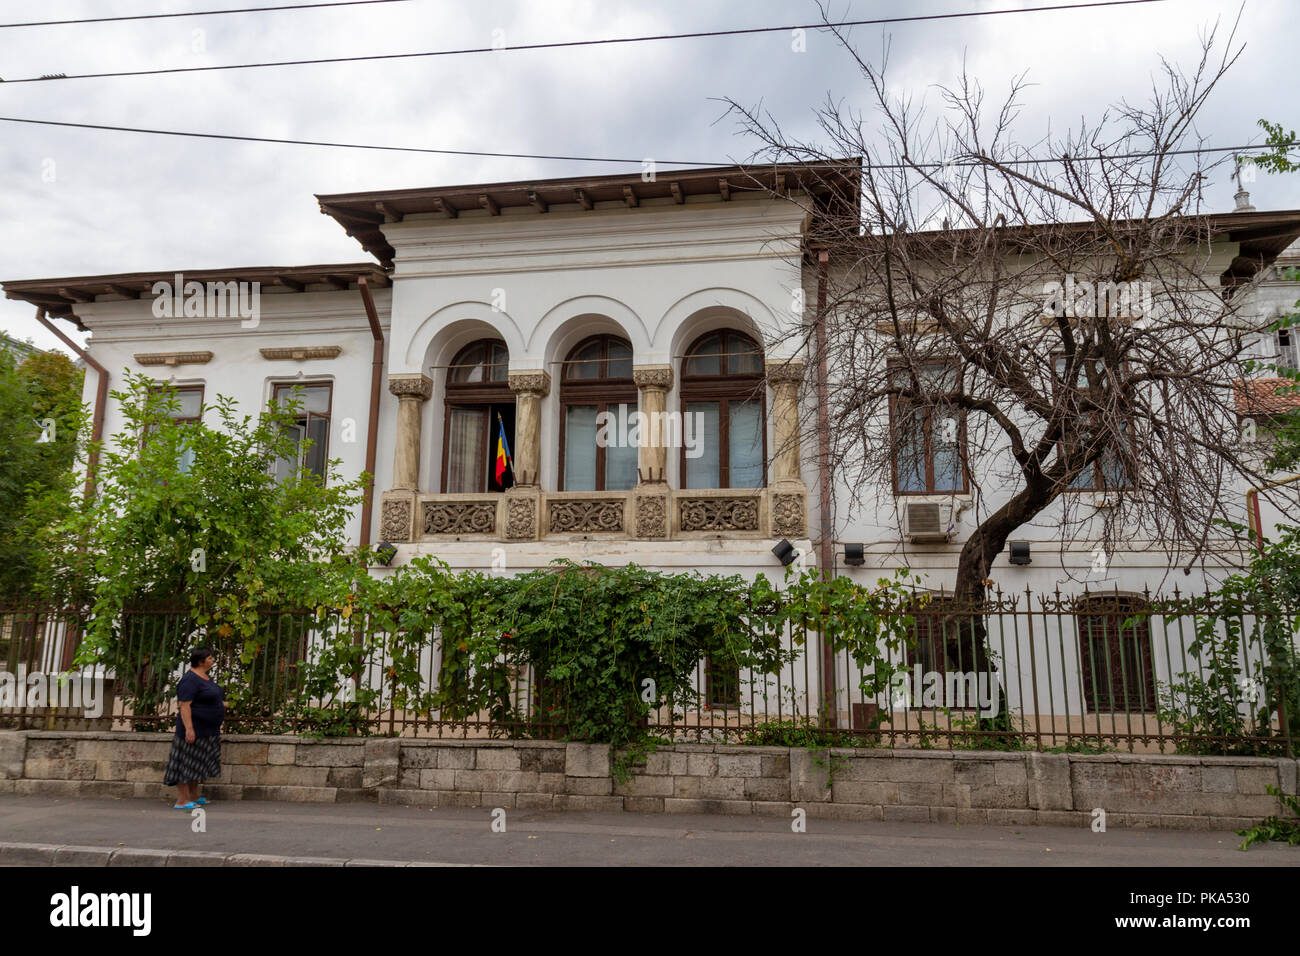 The George Oprescu Institute of Art History on Calea Victoriei in Bucharest, Romania. Stock Photo